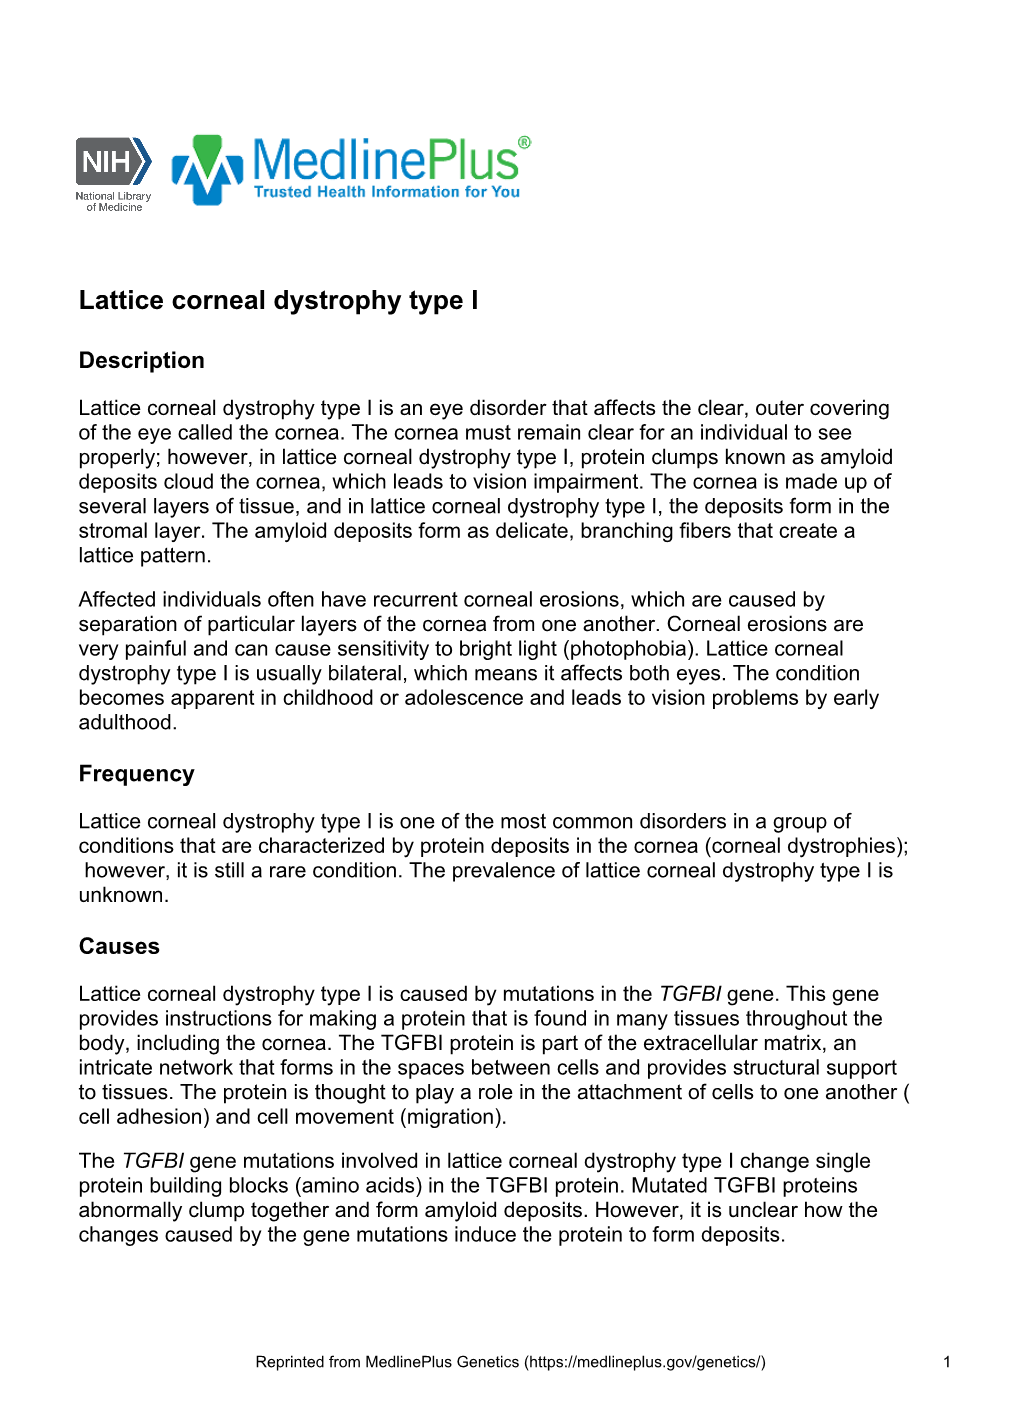 Lattice Corneal Dystrophy Type I